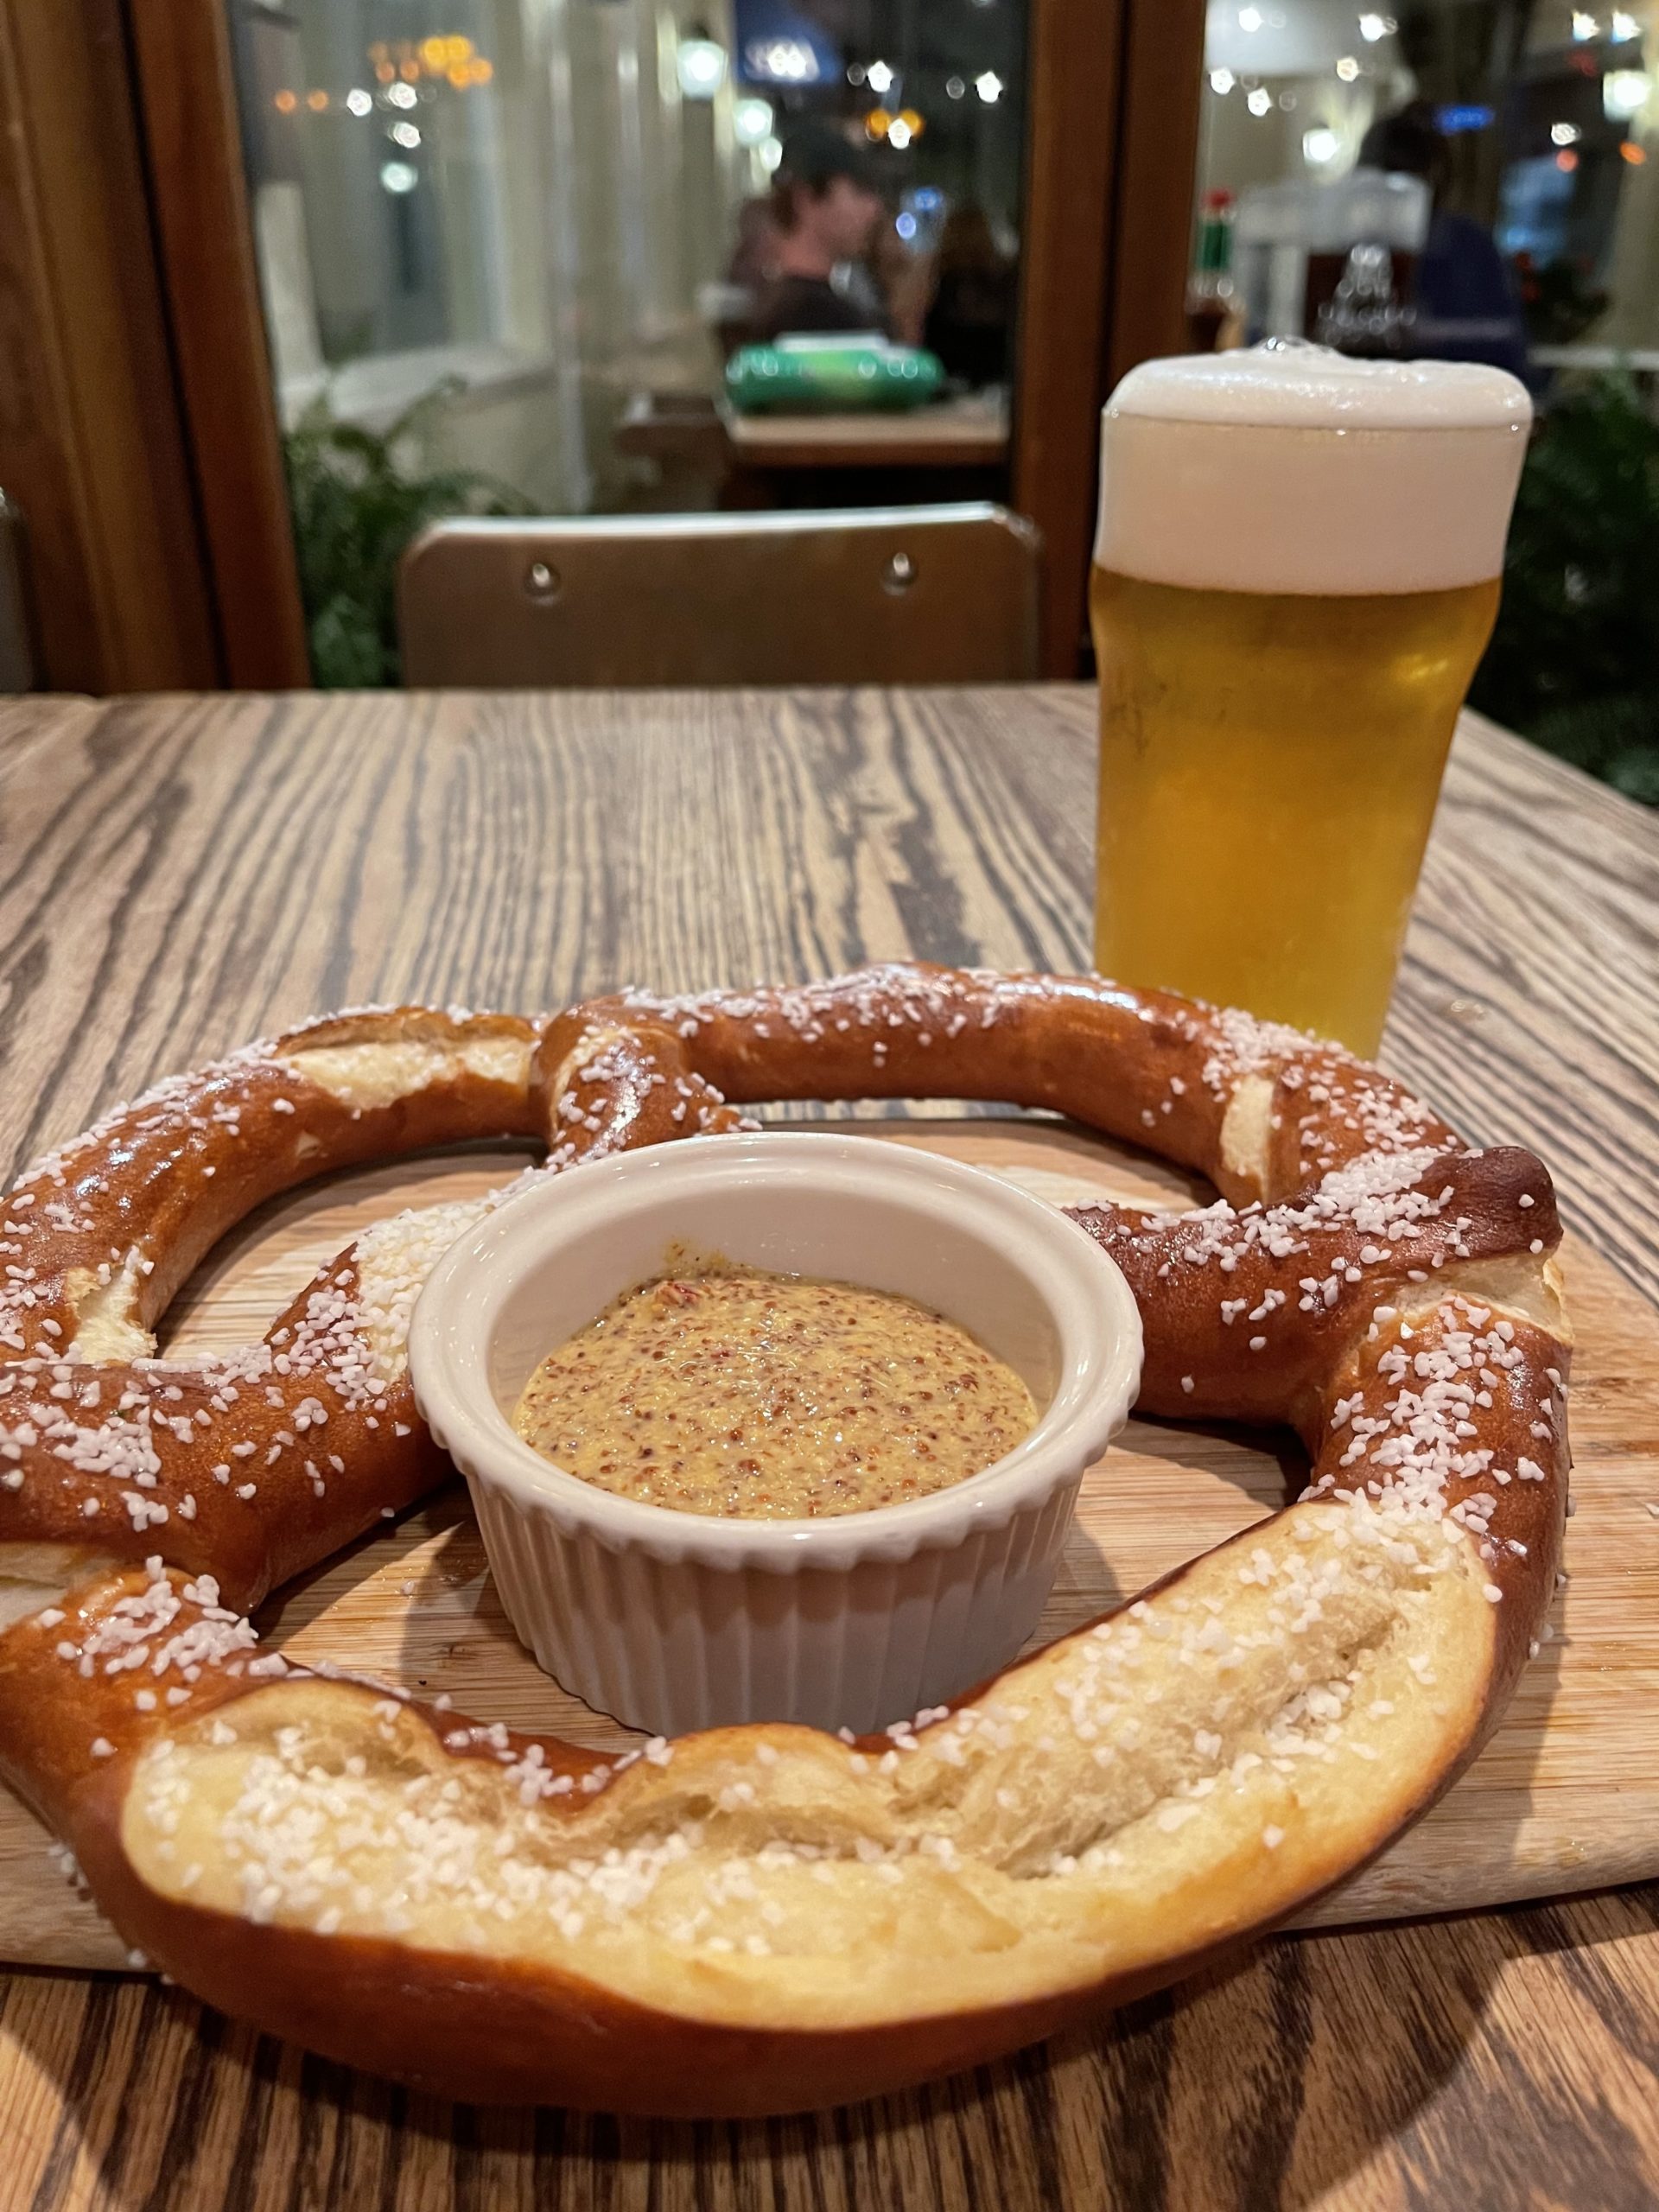 Enjoy a Bavarian pretzel and a beer at Rowdy Hall for Oktoberfest.